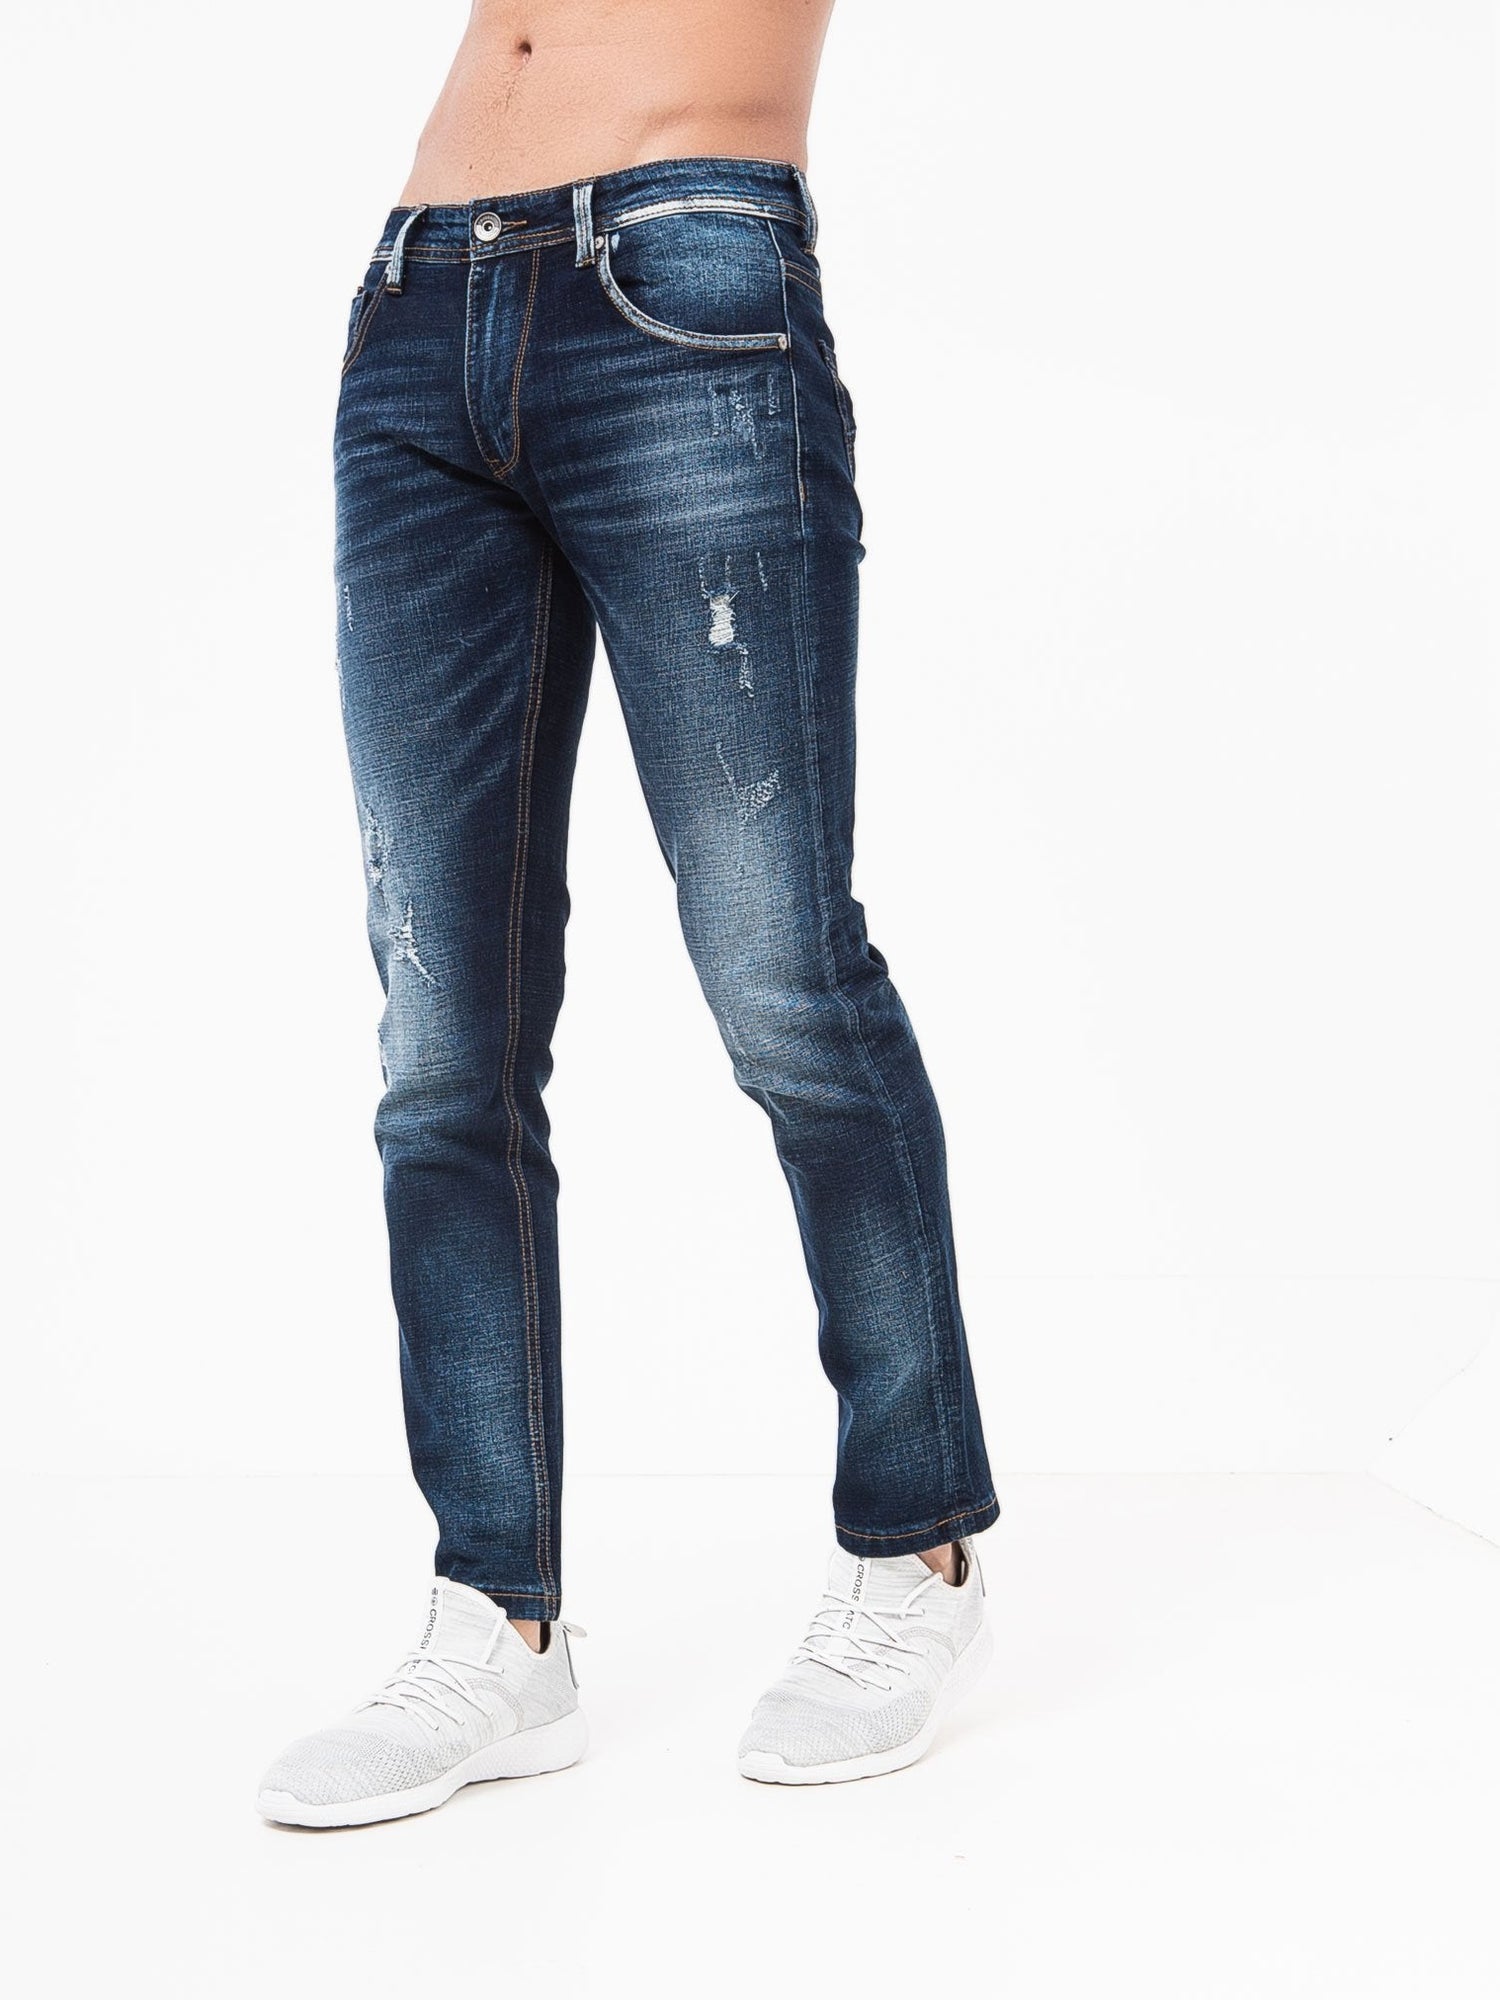 Cibola Jeans W30/l30 / Dark Wash